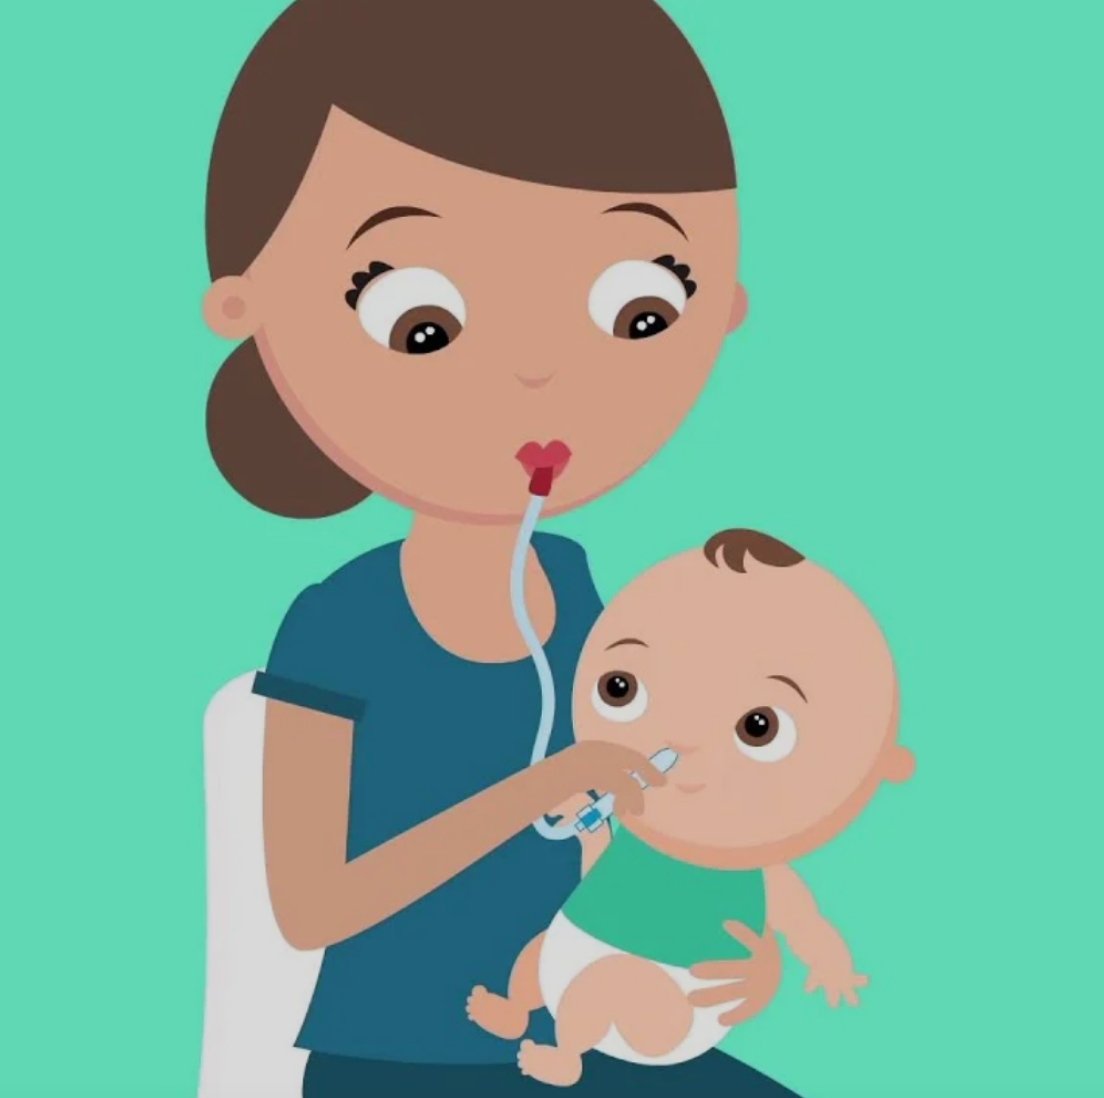 NoseFrida Snotsucker: Best Baby Nasal Aspirator with 24 Hygiene Filters